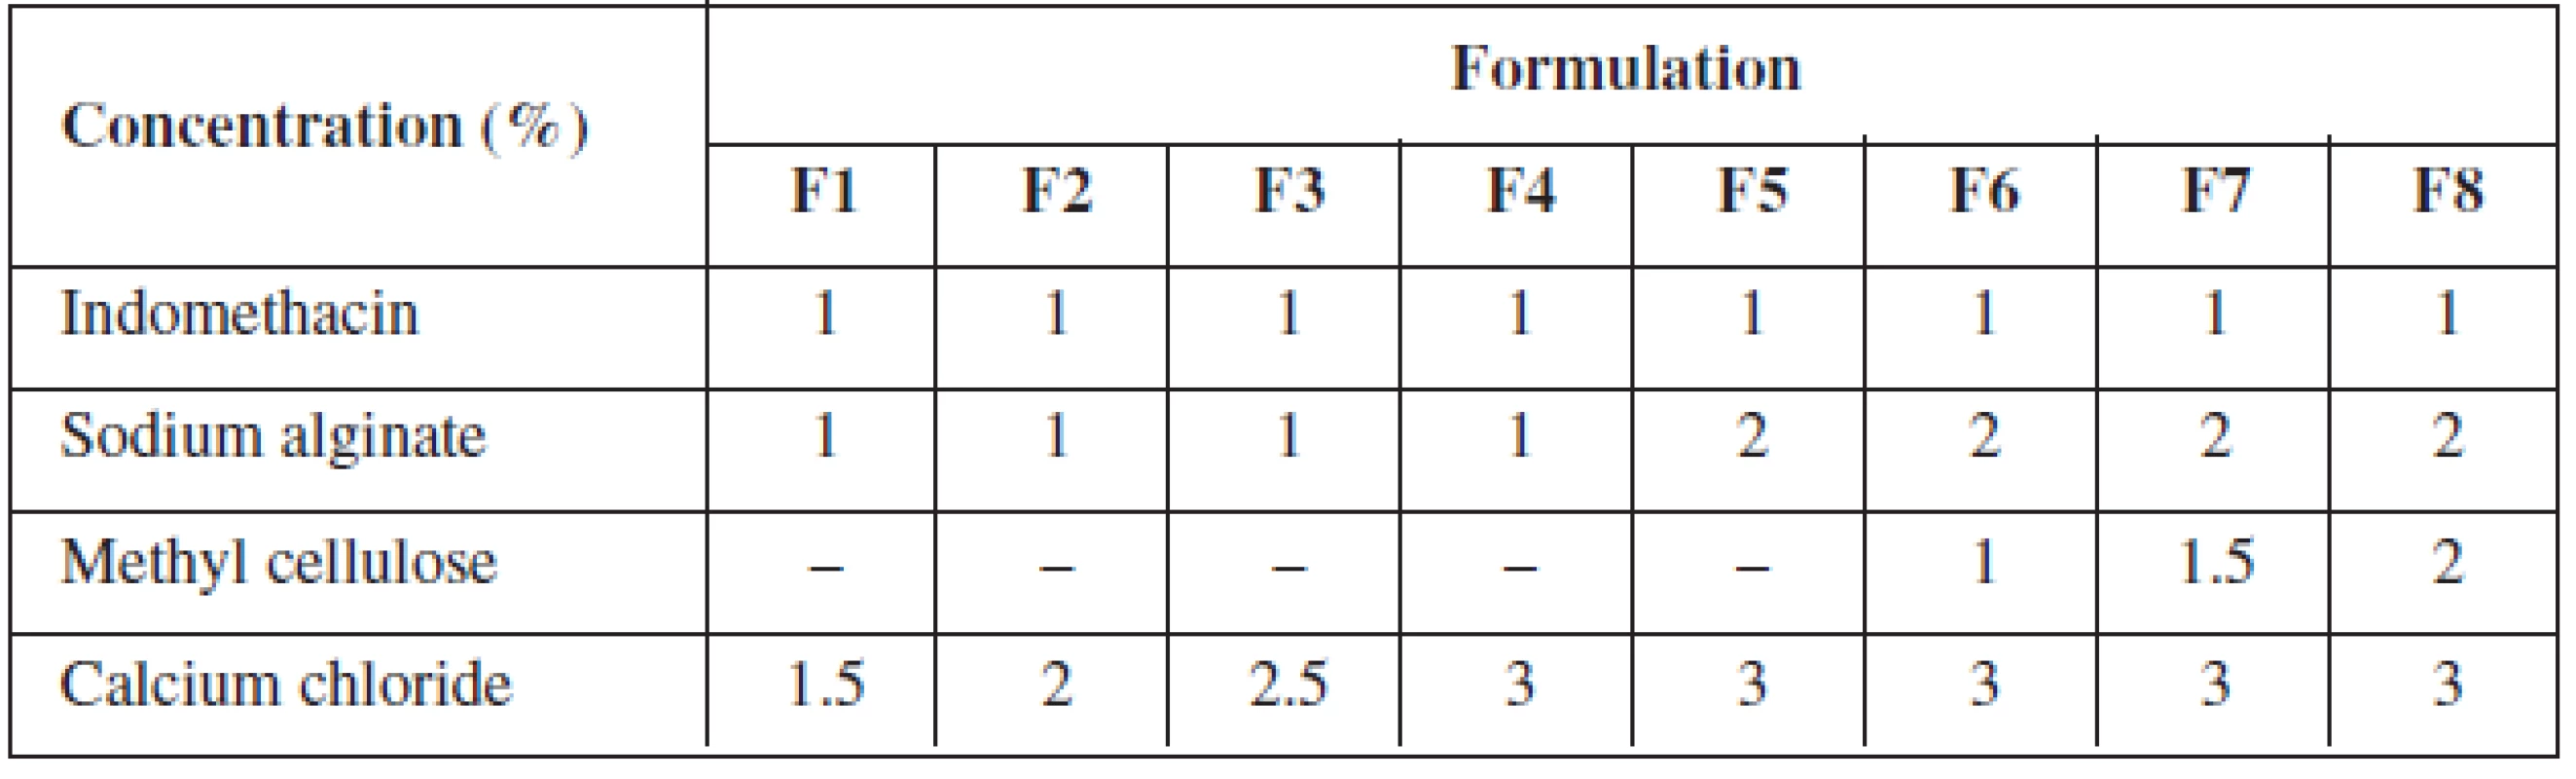 Formulation chart of gels for indomethacin microspheres